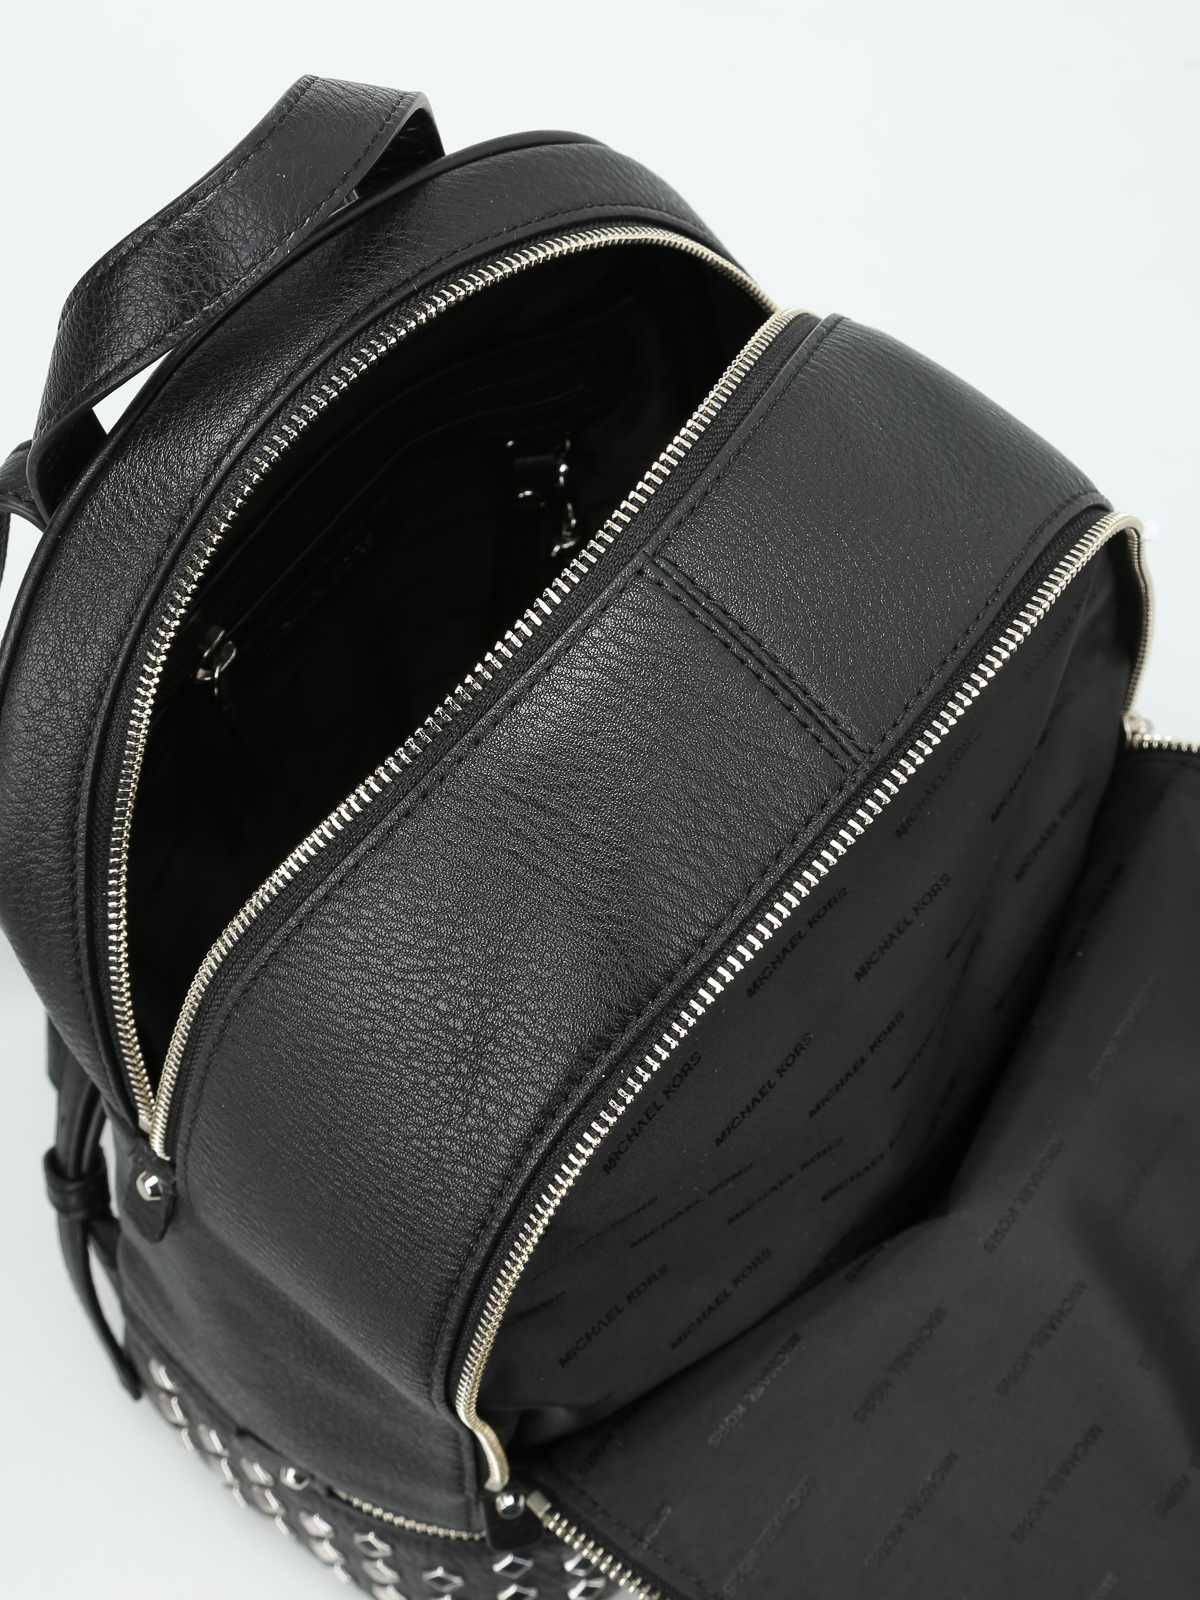 Backpacks Michael Kors - Rhea Zip medium studded black backpack